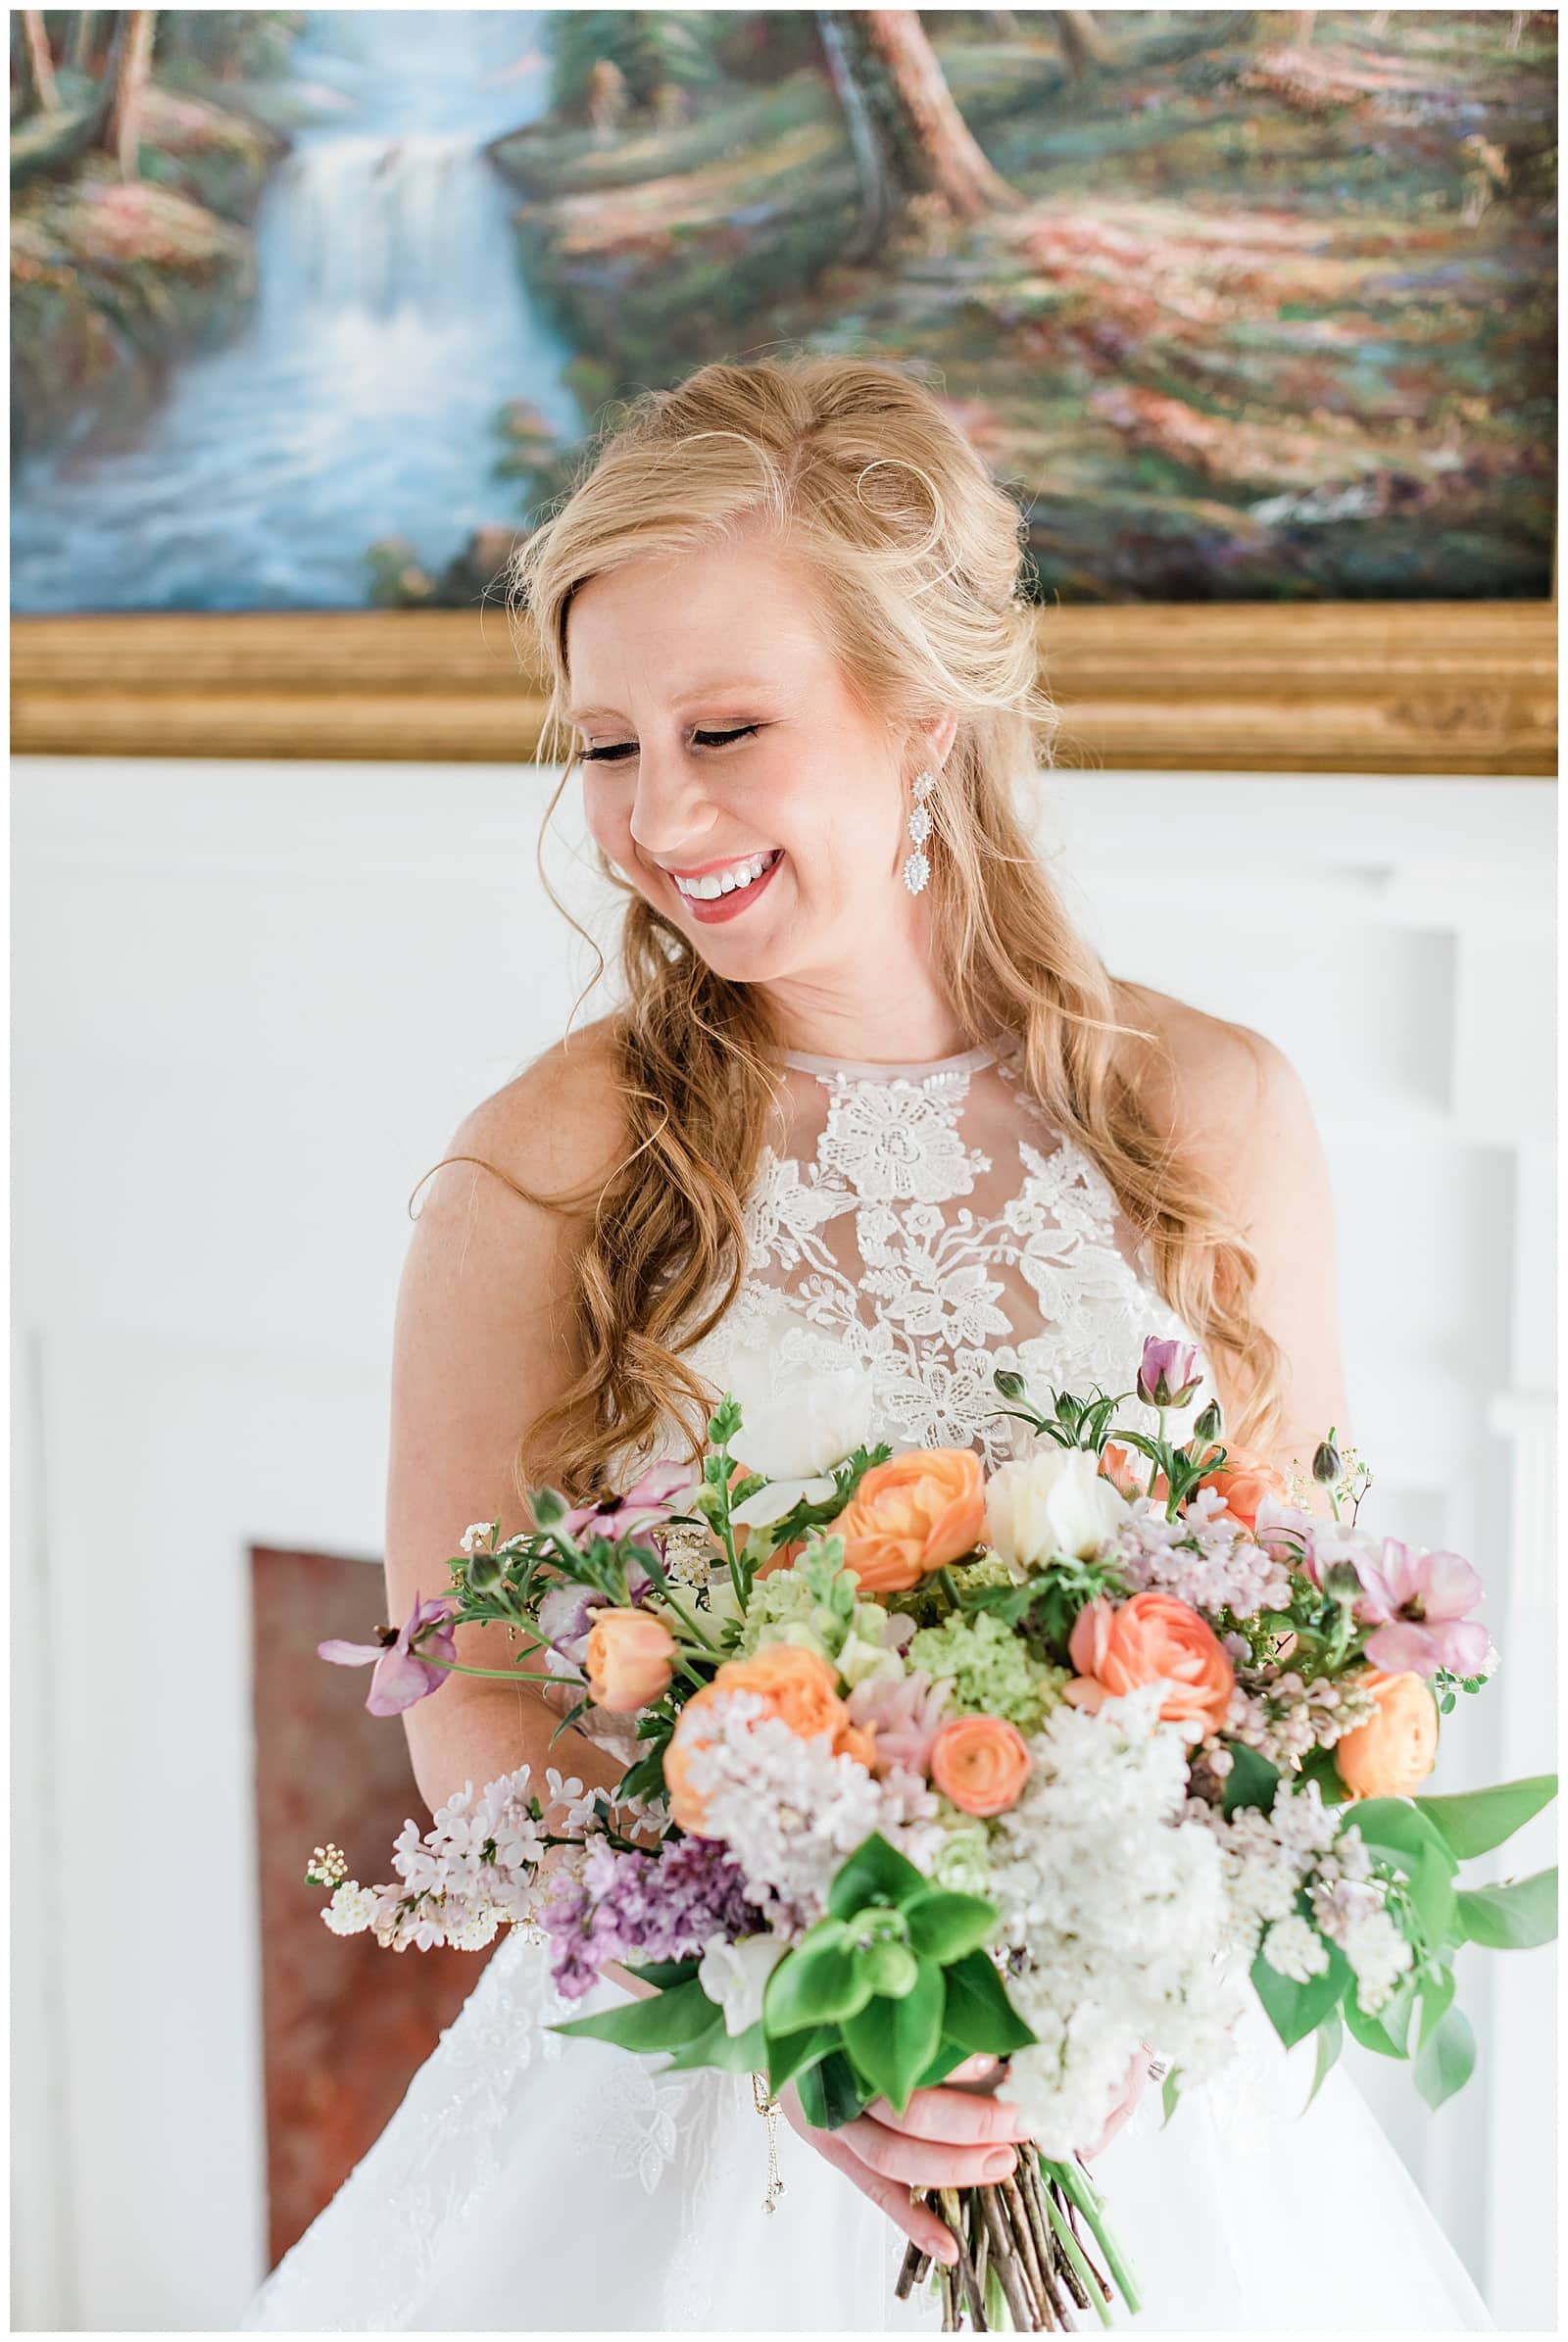 Danielle-Defayette-Photography-Cherokee-Creek-Farm-Bridal-Wedding-Portraits_0003.jpg